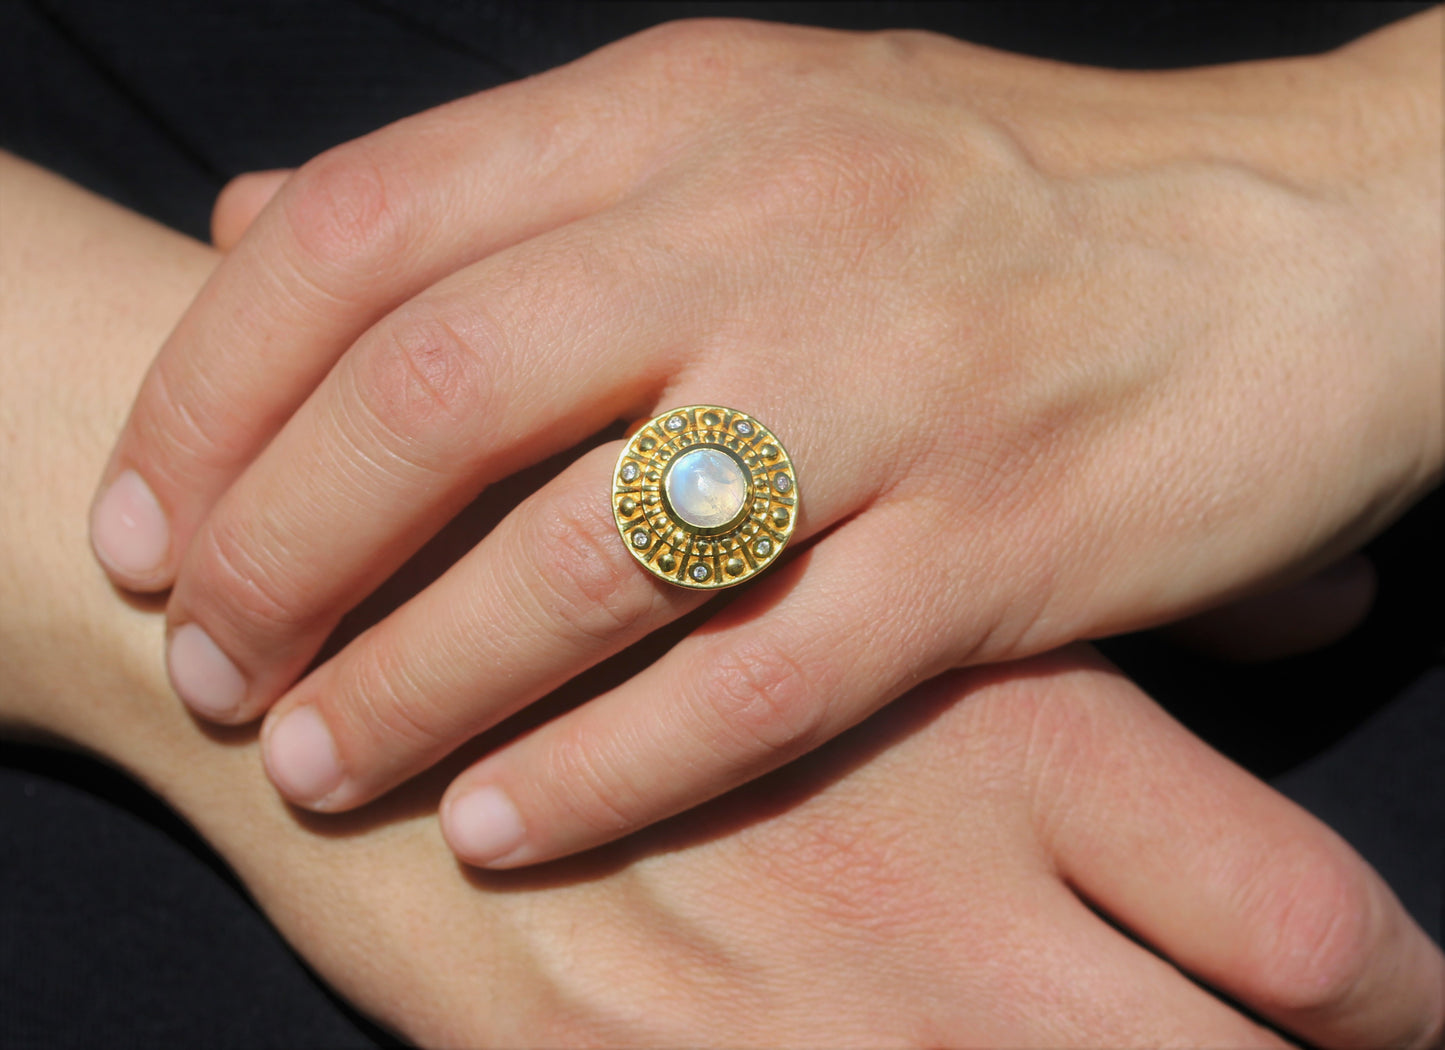 Moonstone Medallion Ring - 24k Gold Plated - Adjustable Size #275